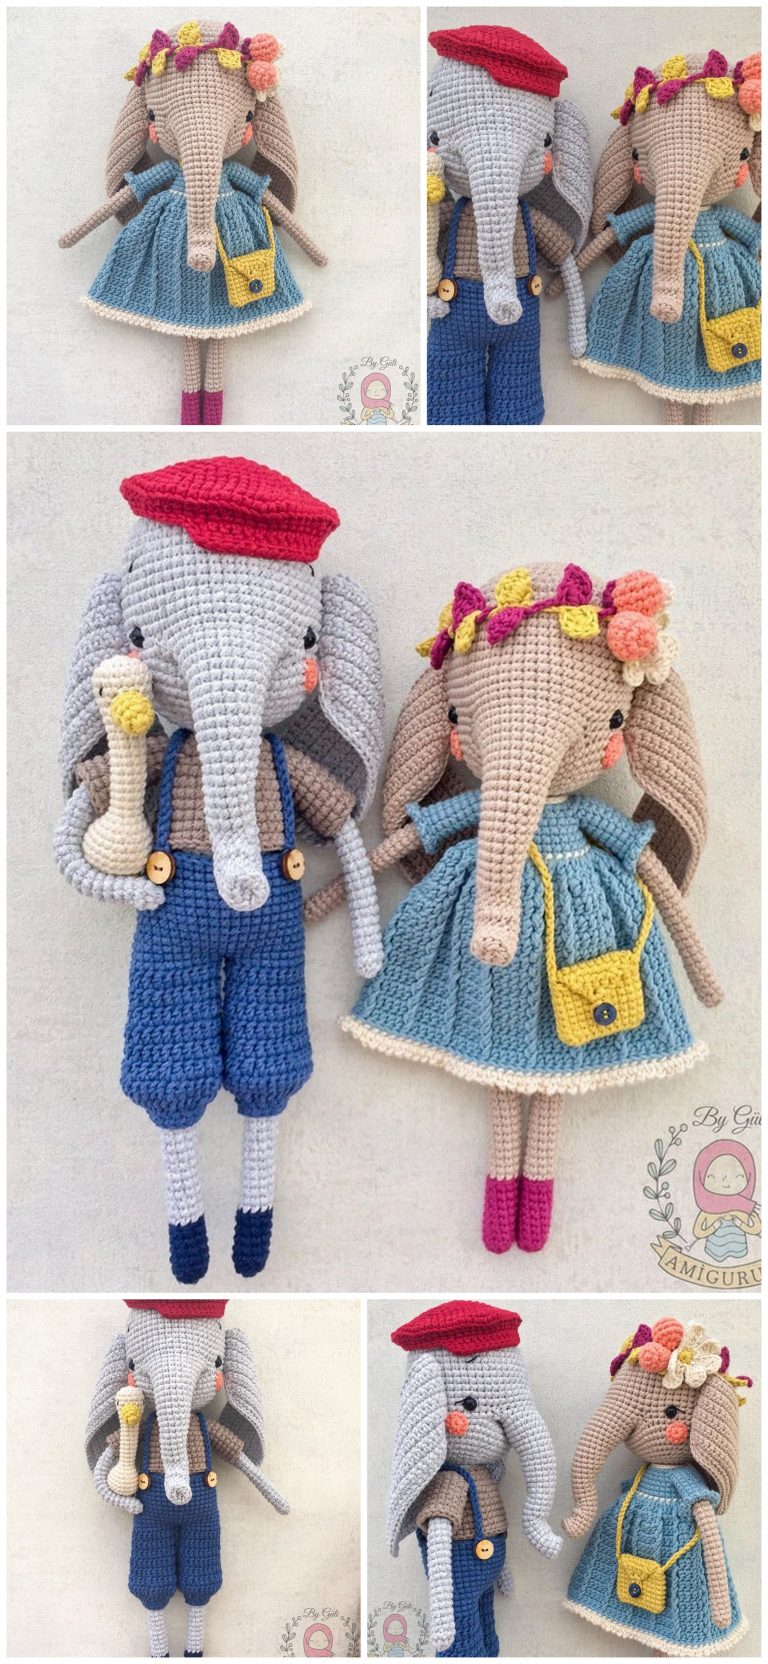 5 wonderful Amigurumi Crochet Patterns